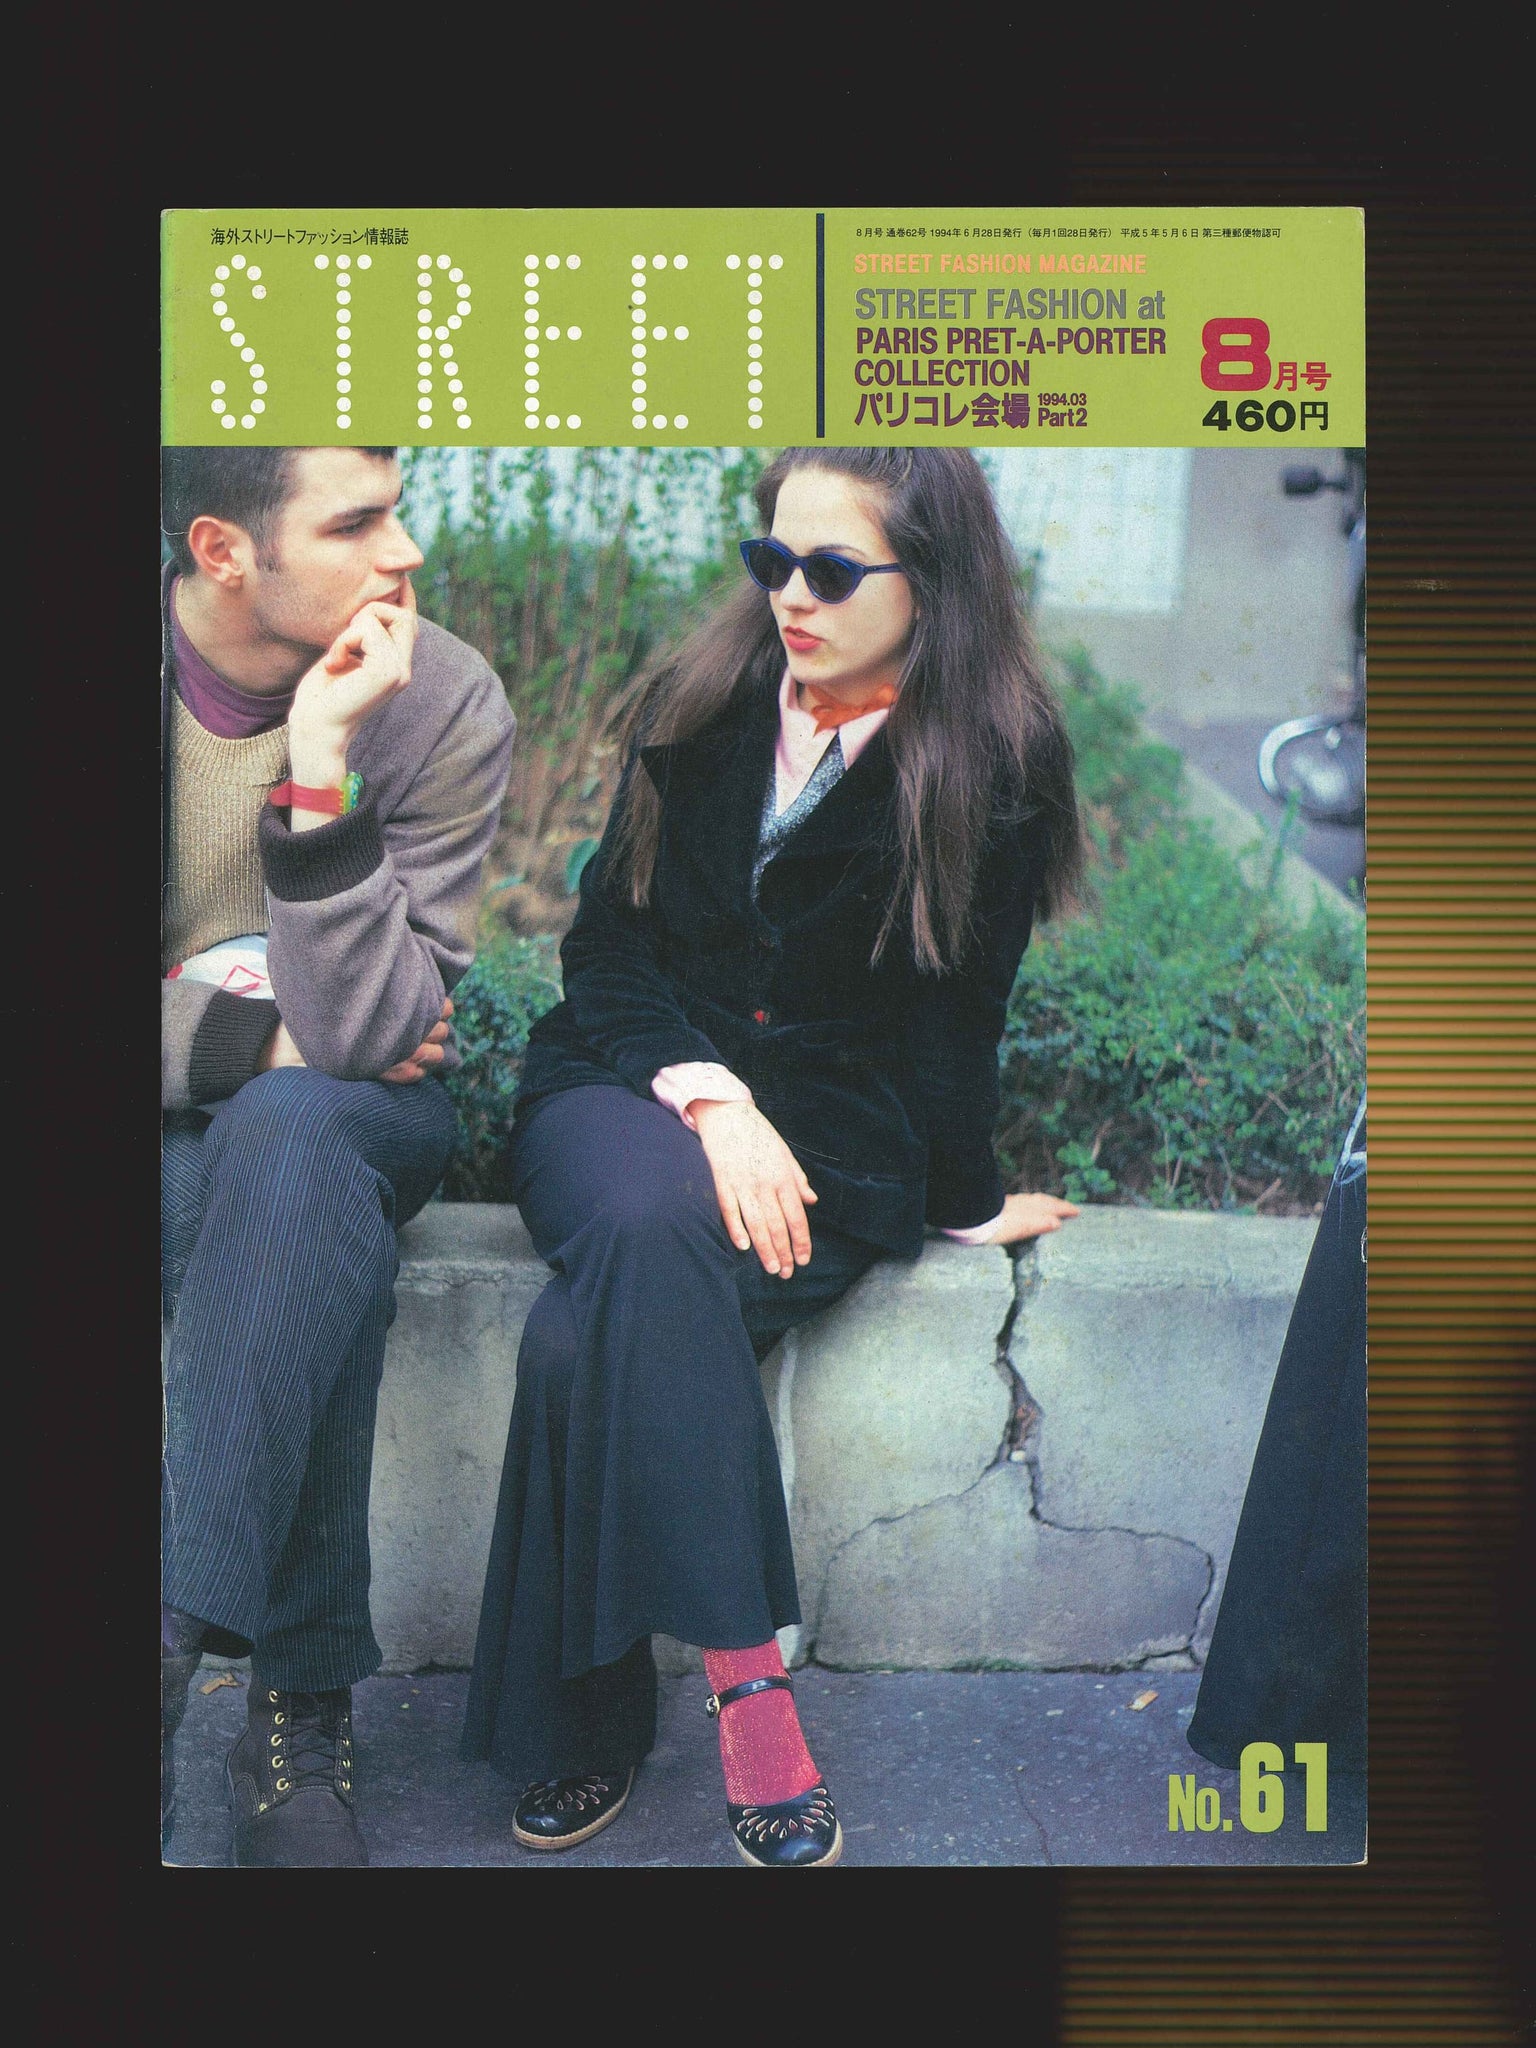 STREET magazine no. 61 / august 1994 / paris collections / Shoichi Aoki